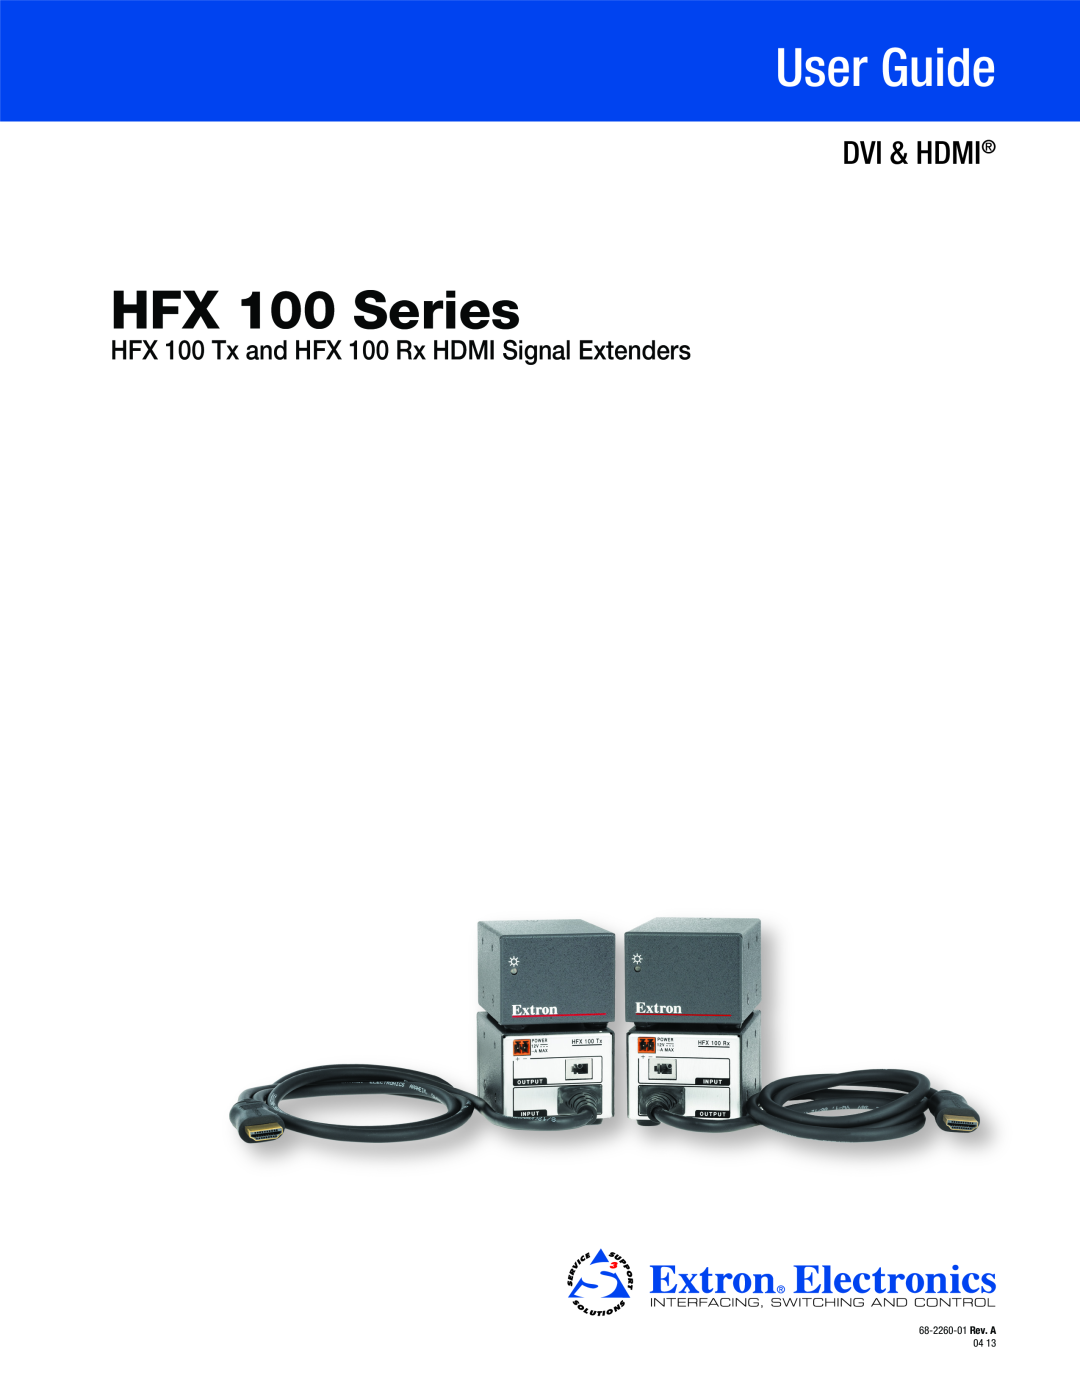 Extron electronic HFX 100 RX, HFX 100 TX manual HFX 100 Series, User Guide, Dvi & Hdmi 